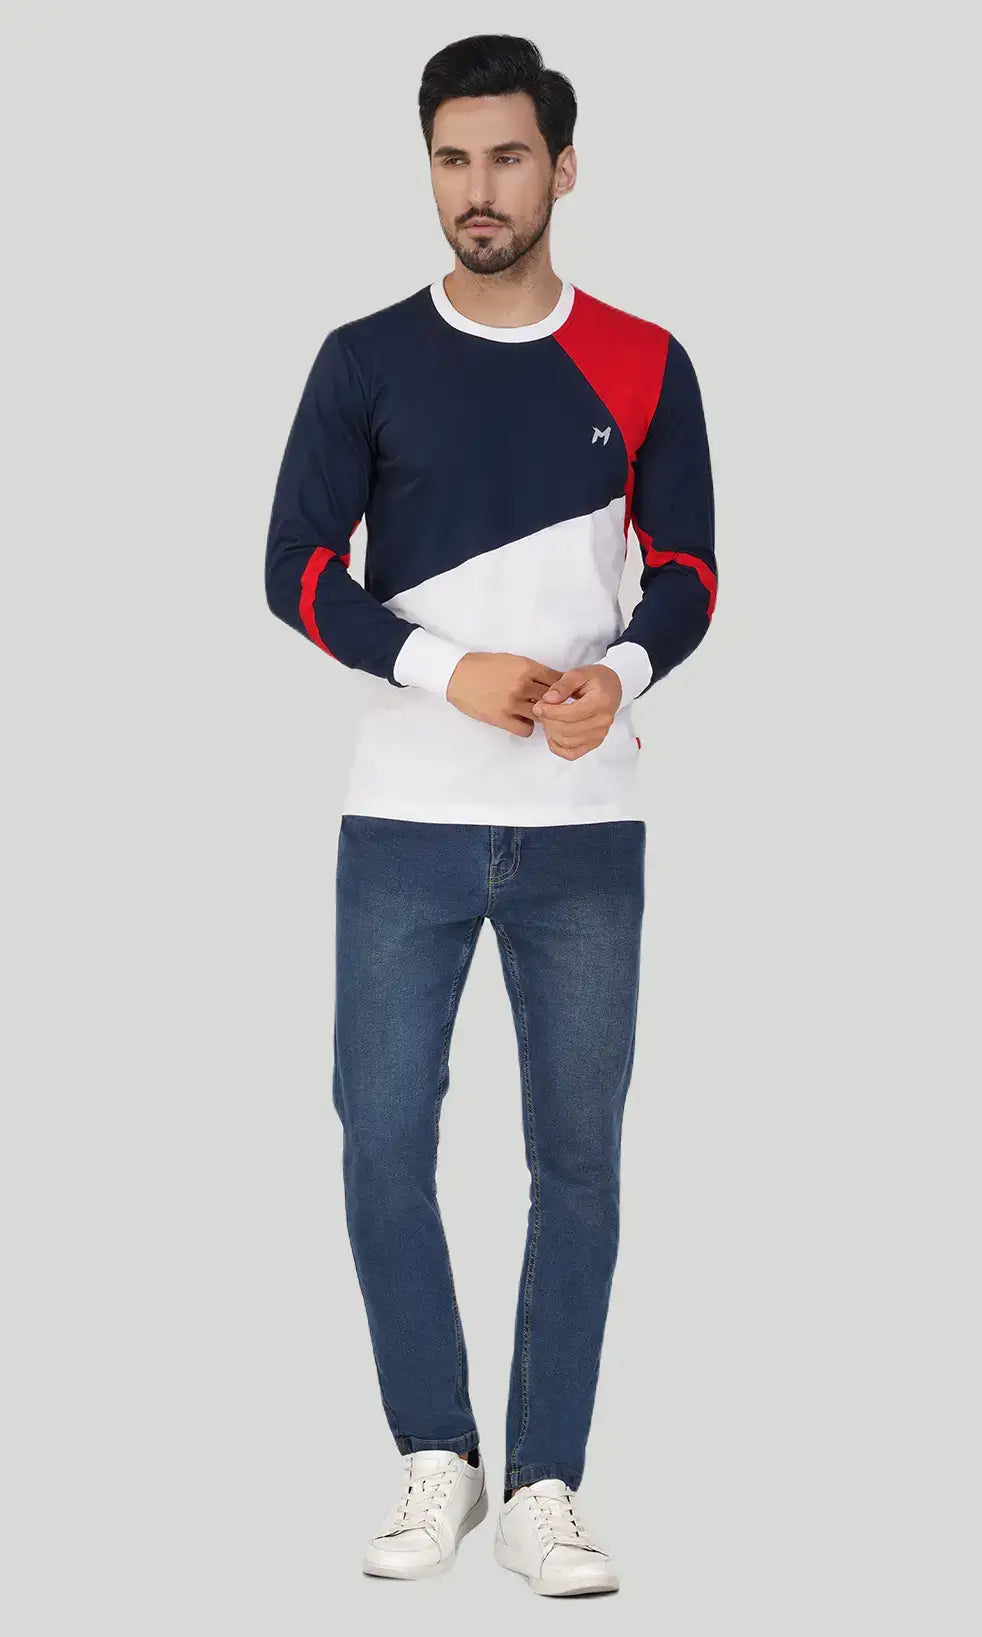 Mebadass Cotton Men's Winterwear ColorBlocked Sweatshirt - White Navy Maroon